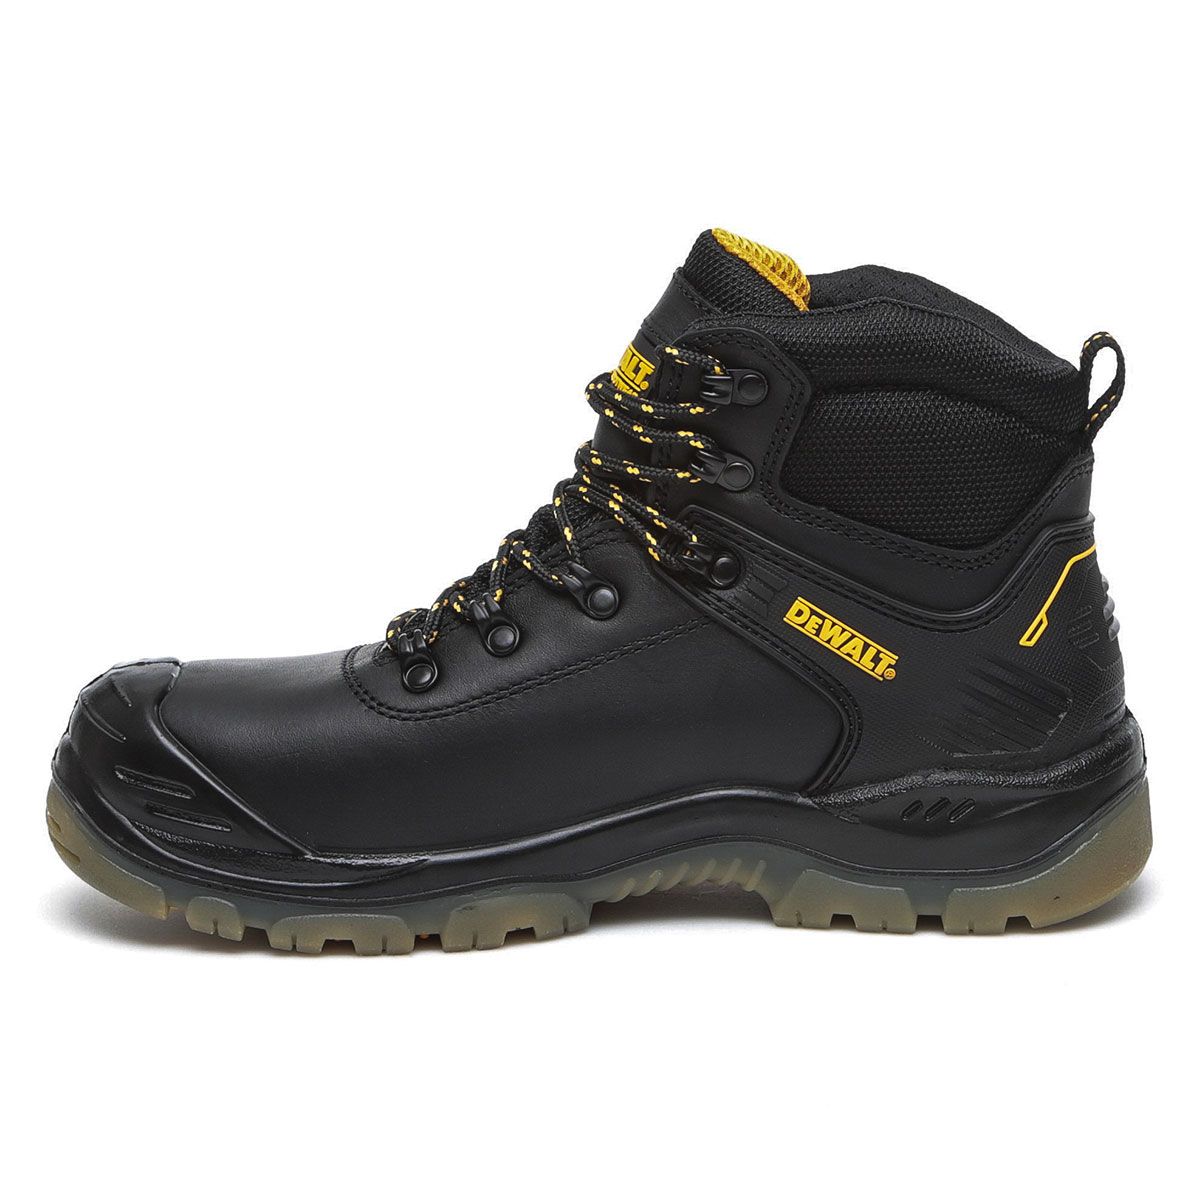 DeWalt Newark Men's Black Safety boots, Size 10